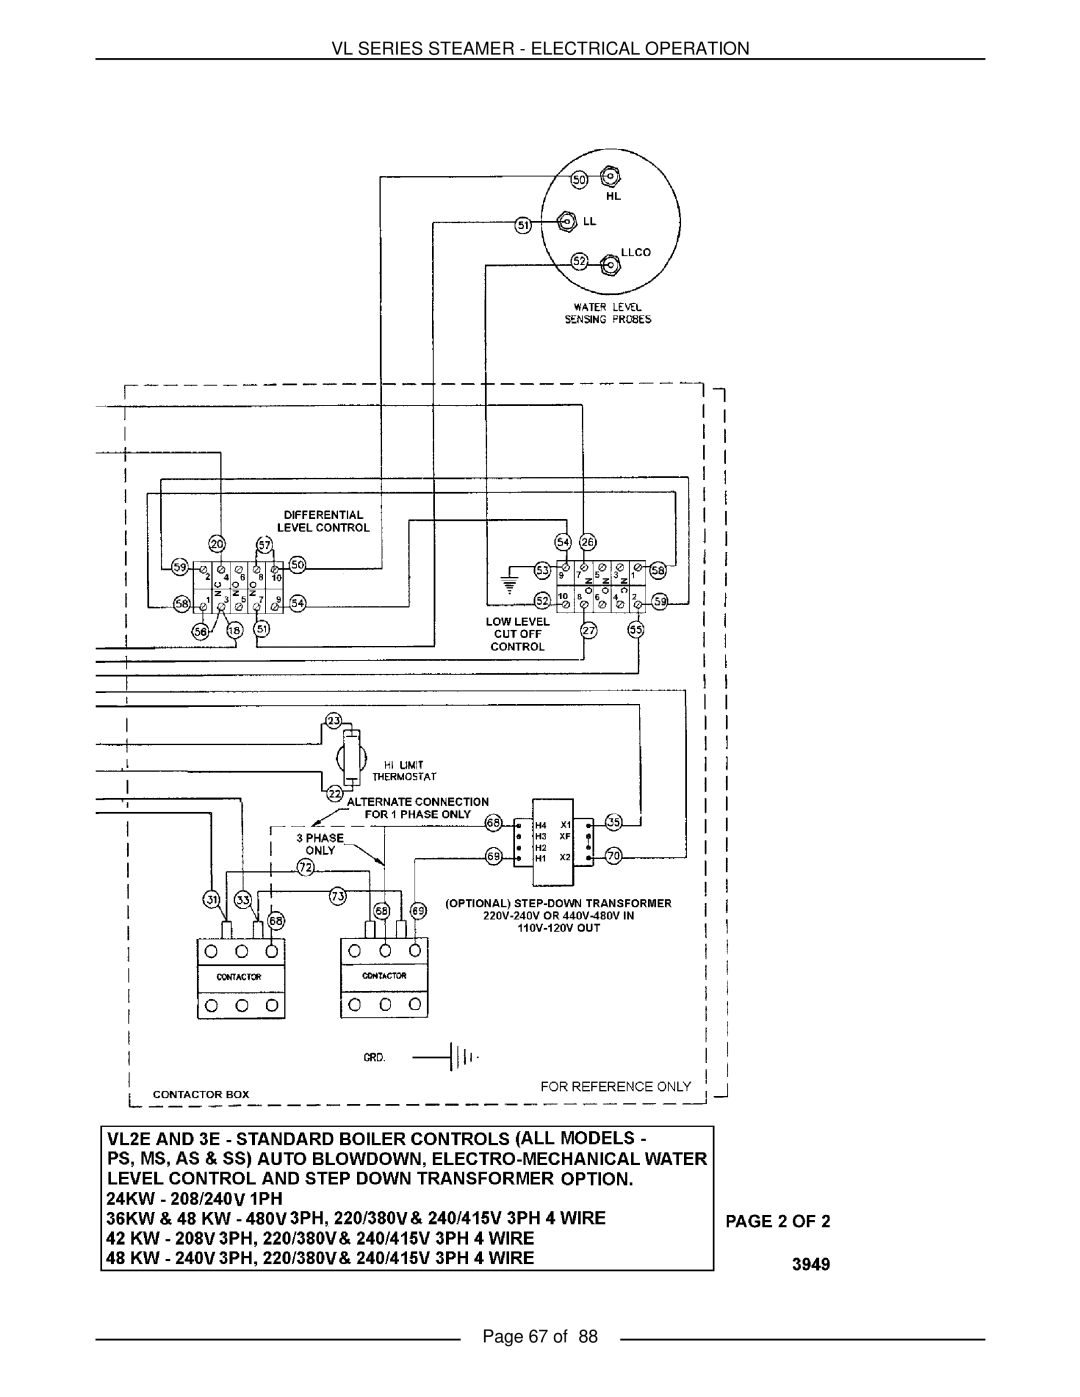 Vulcan-Hart VL2GAS, VL3GMS, VL2GMS, VL3GAS, VL2GSS, VL3GSS, VL3GPS, VL2GPS Vl Series Steamer - Electrical Operation, Page 67 of 